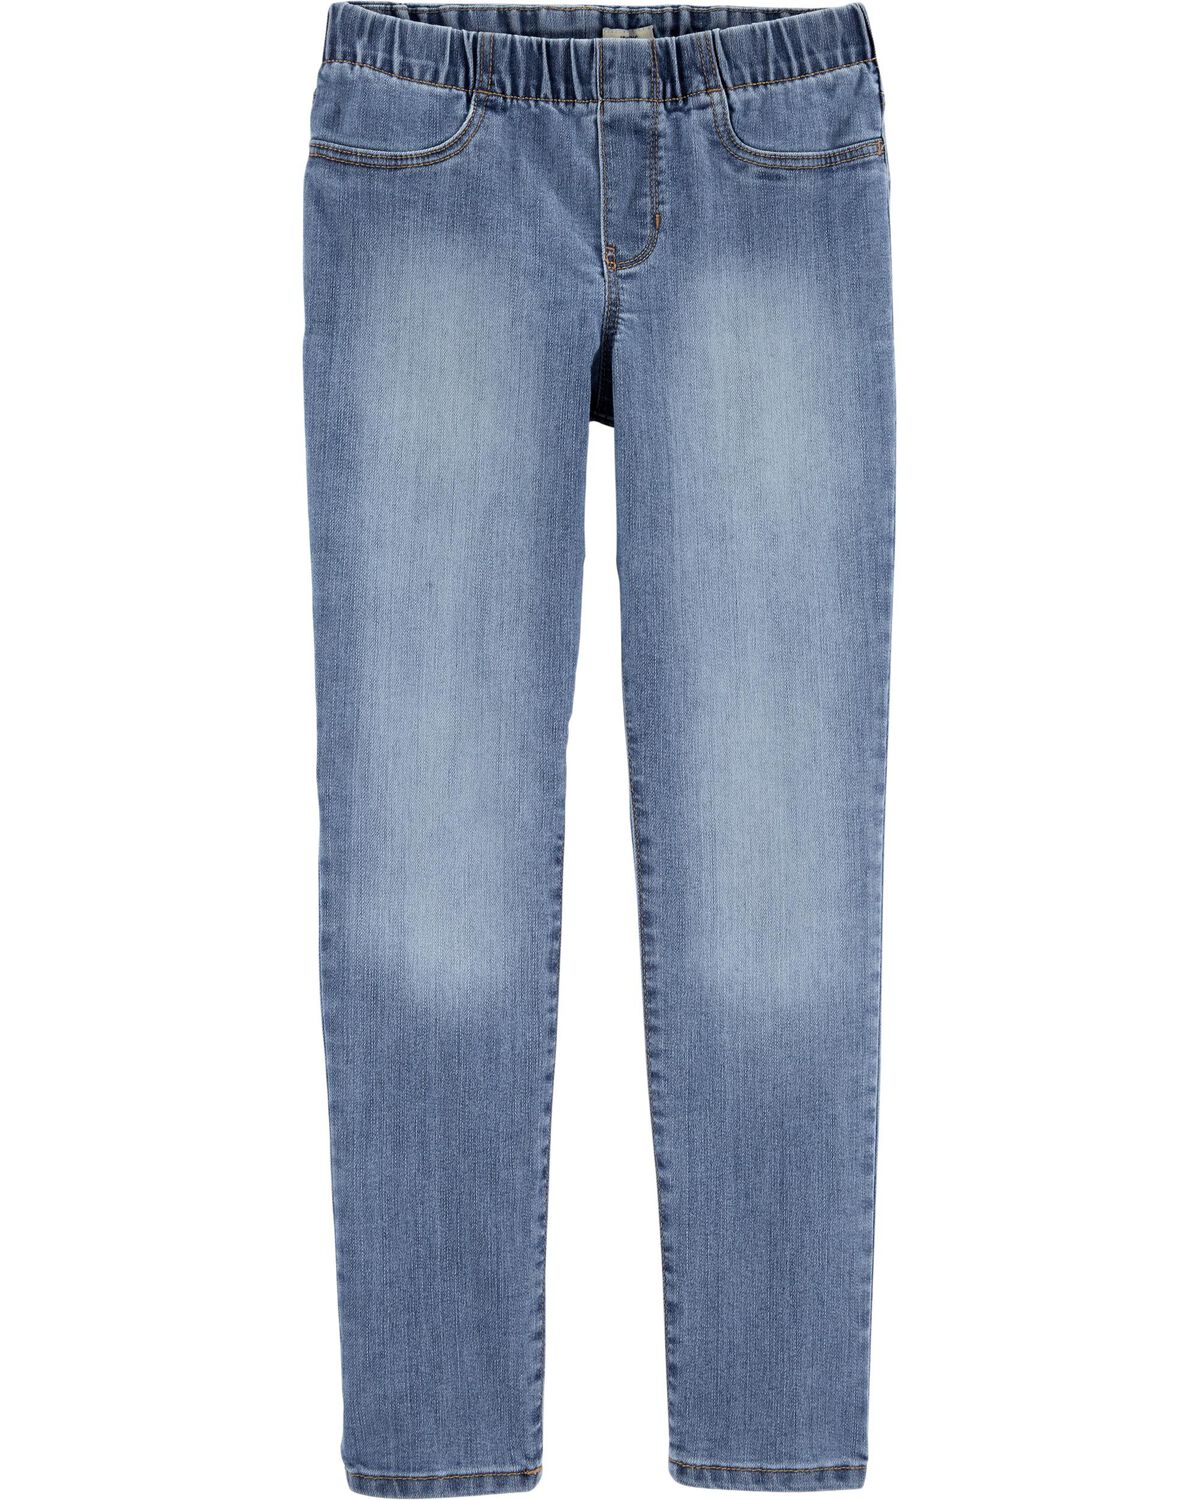 Denim&Co, Jeans, Denim Co Womens Petite Jeans Pm Silky Comfy Knit Jegging  Blue A548777